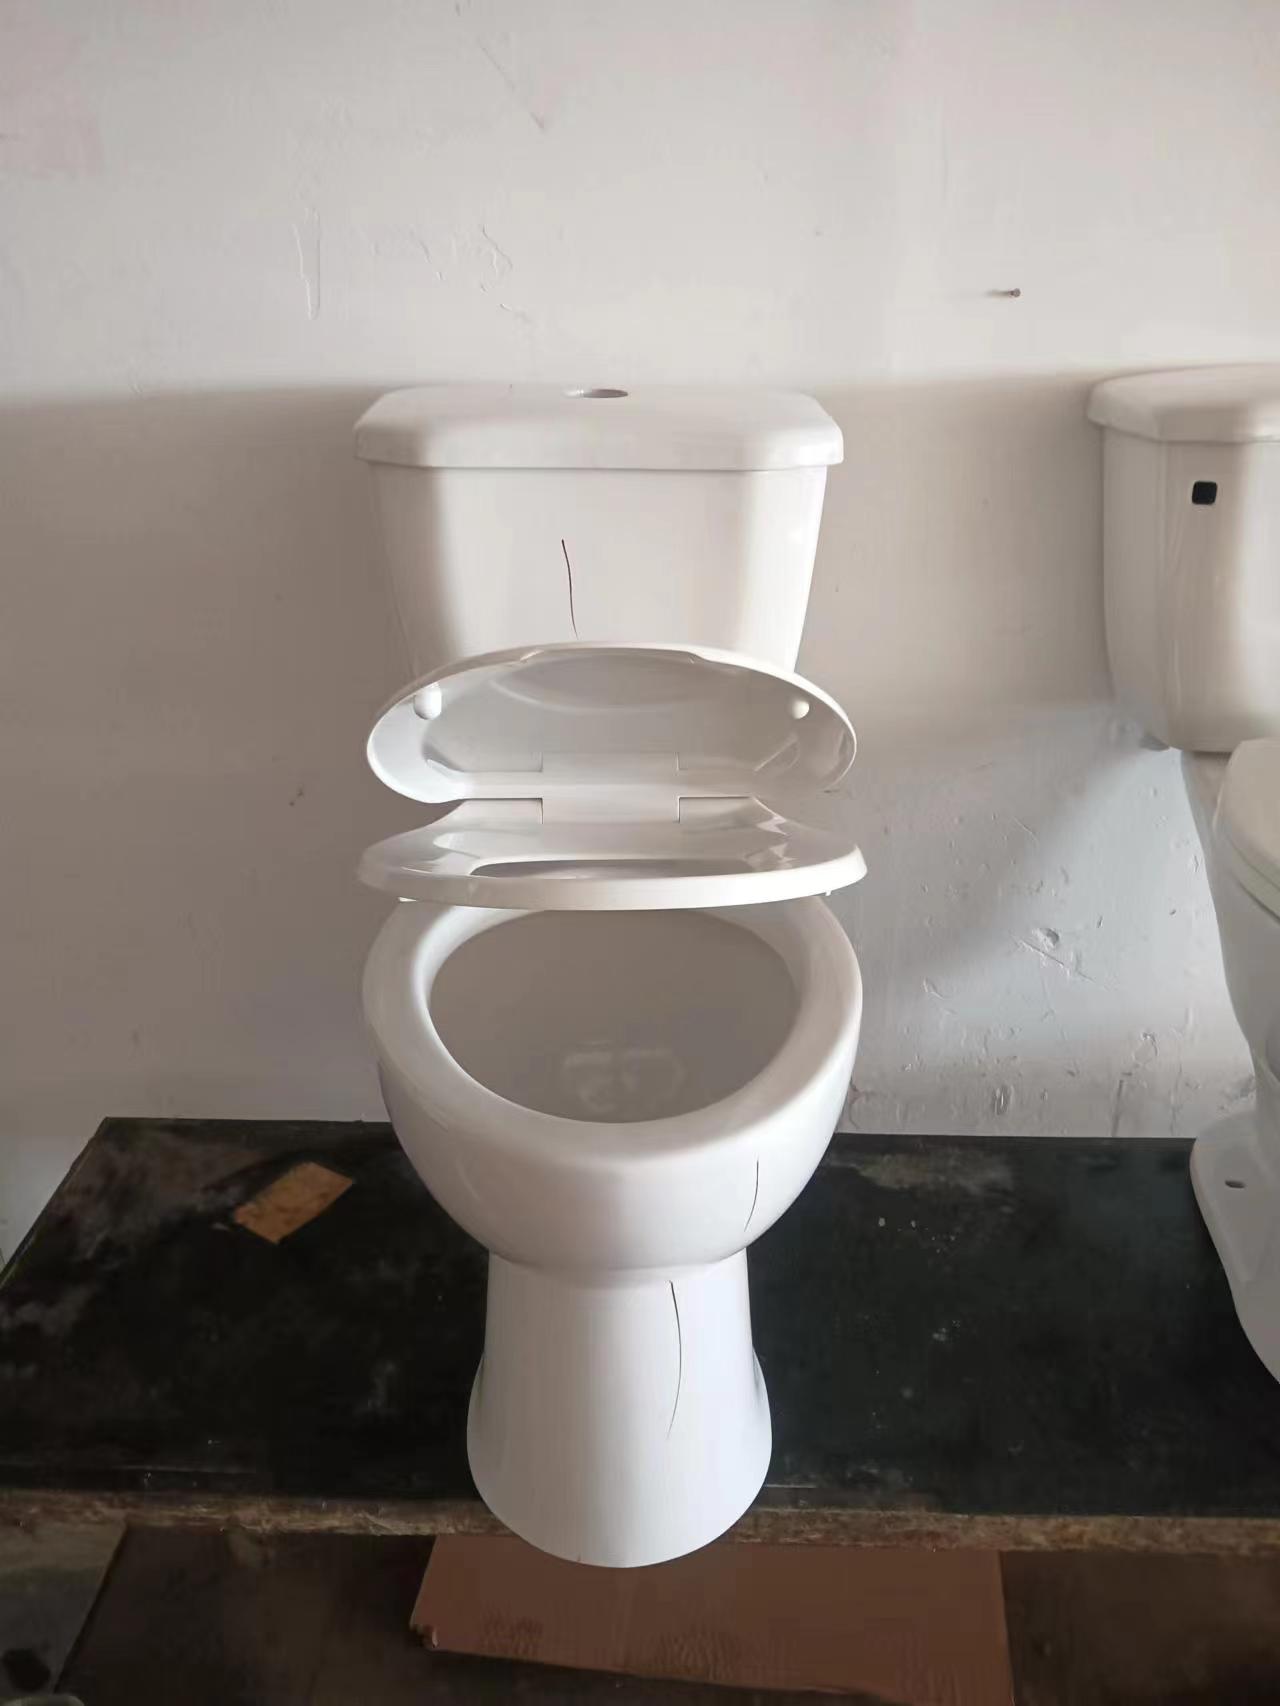 0425H toilet (1)